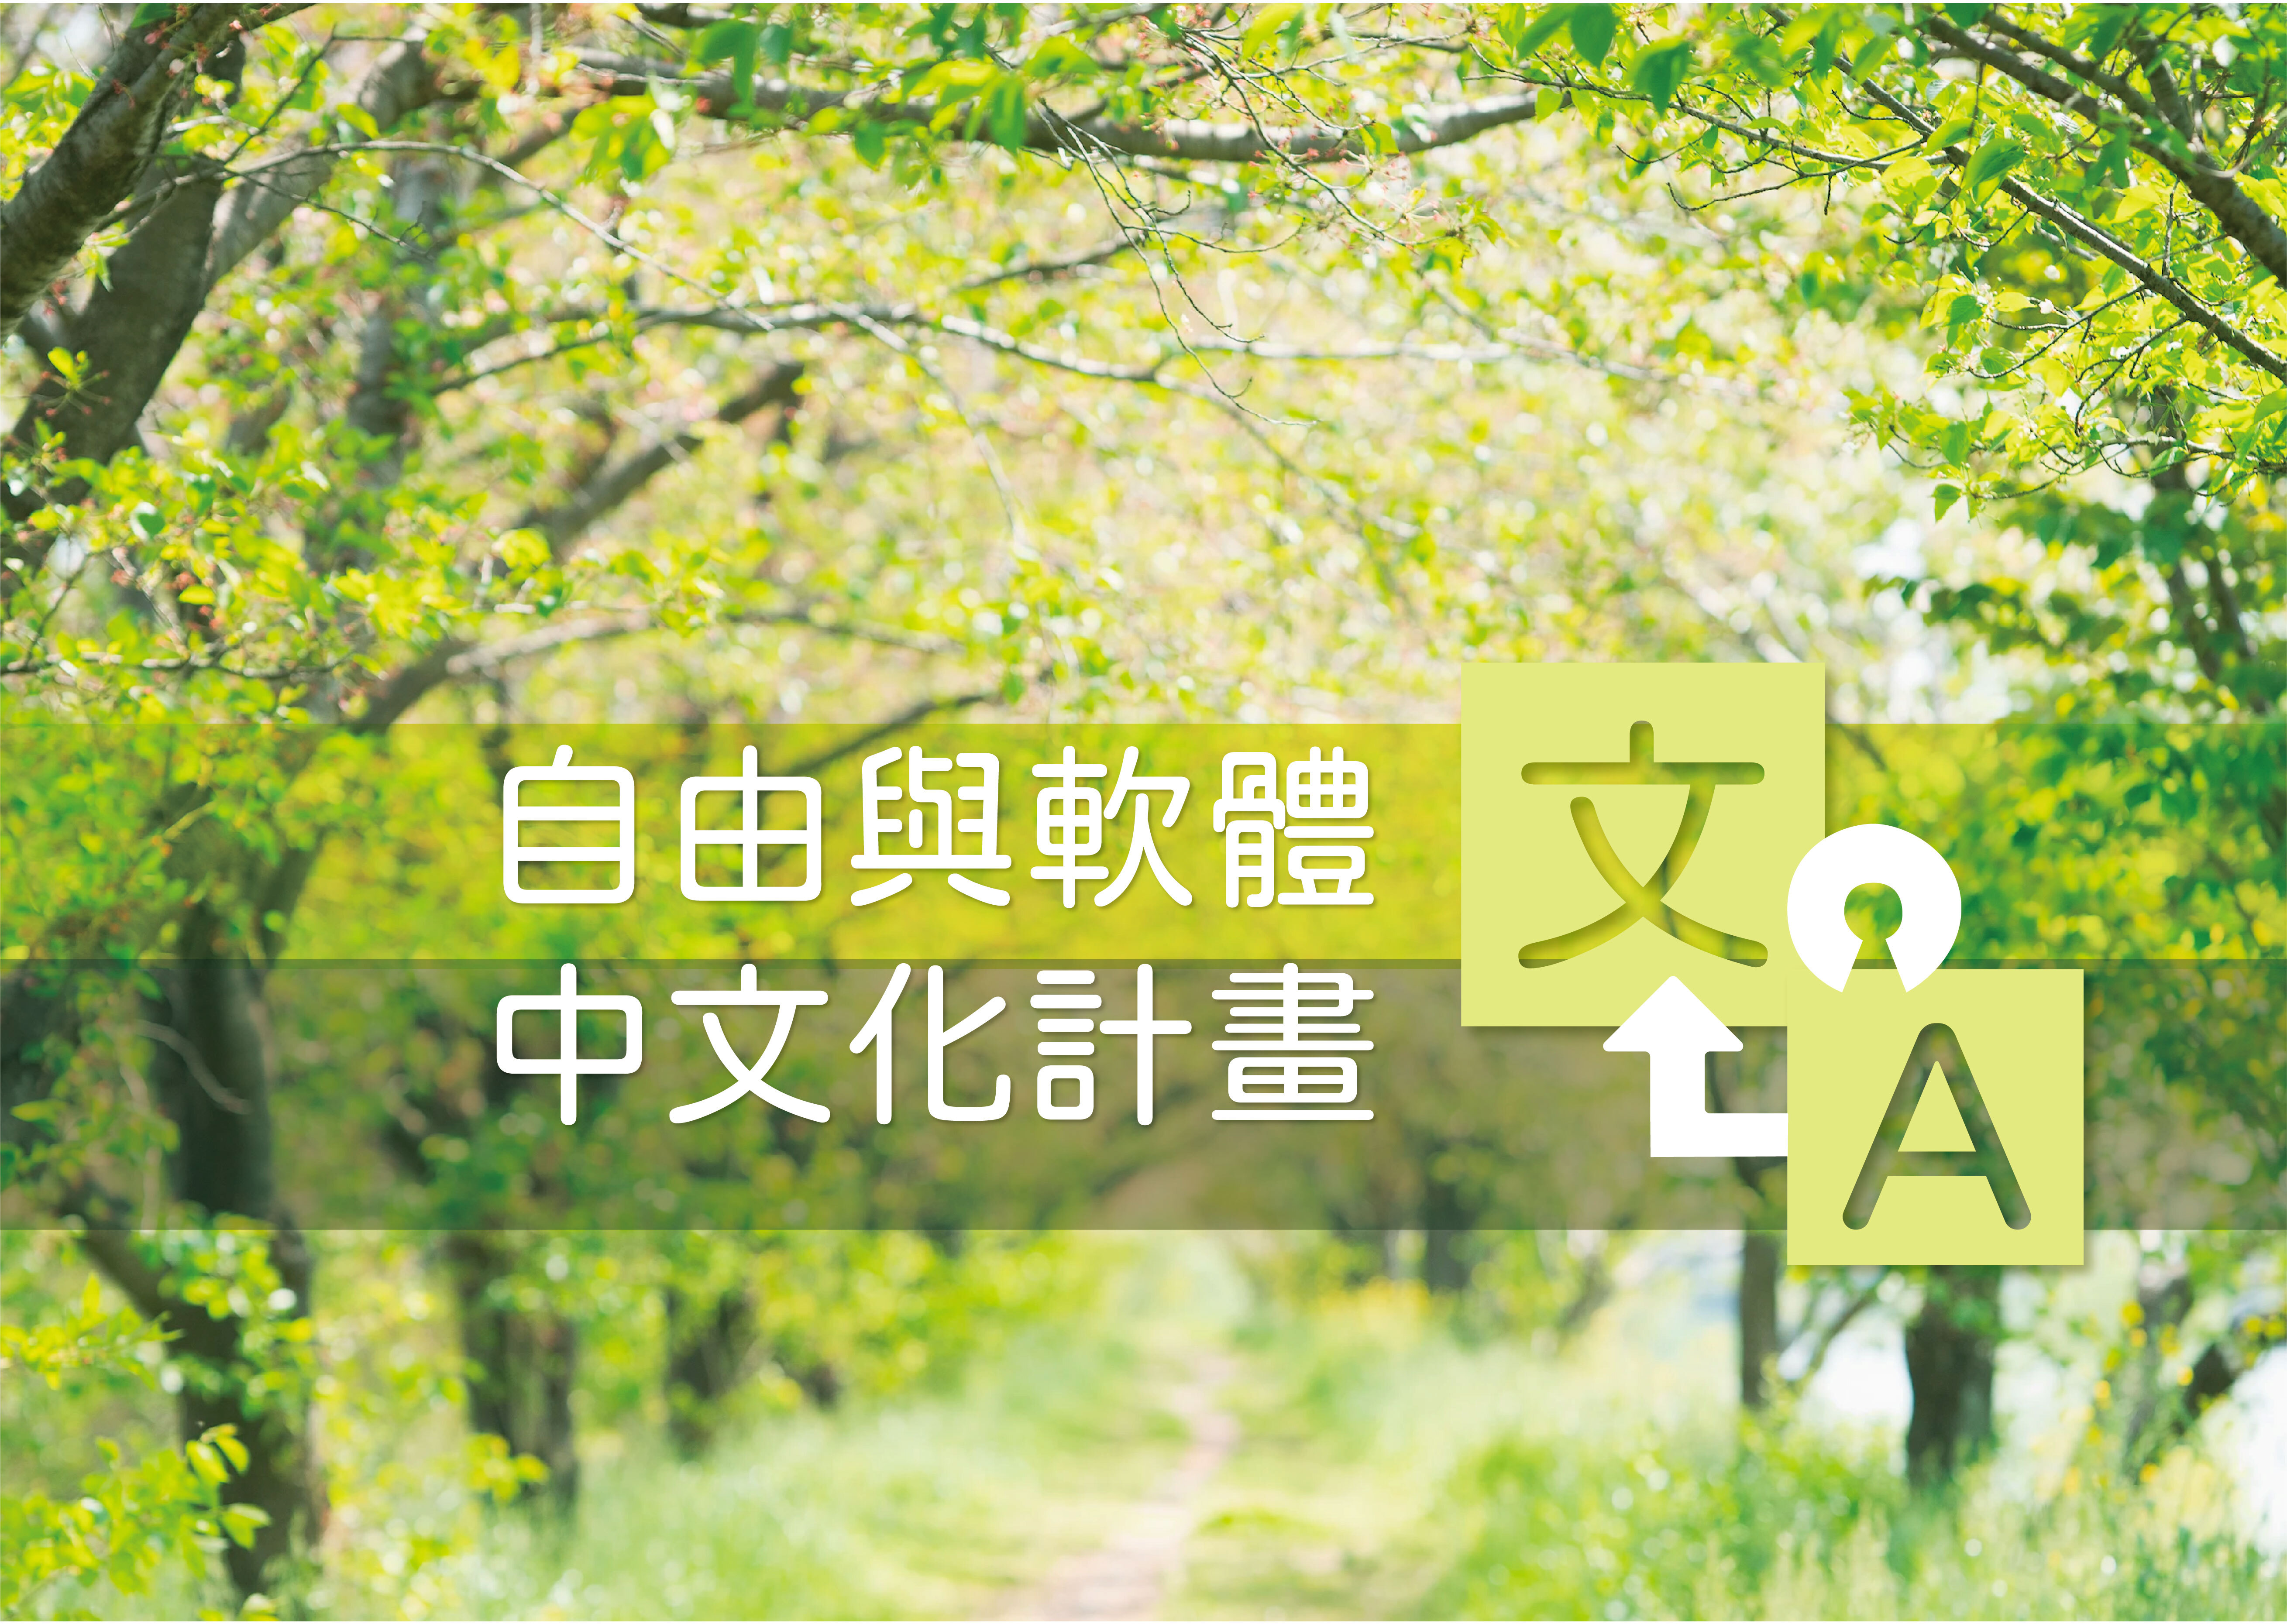 Visual identity image for '自由與開源軟體中文化計畫'